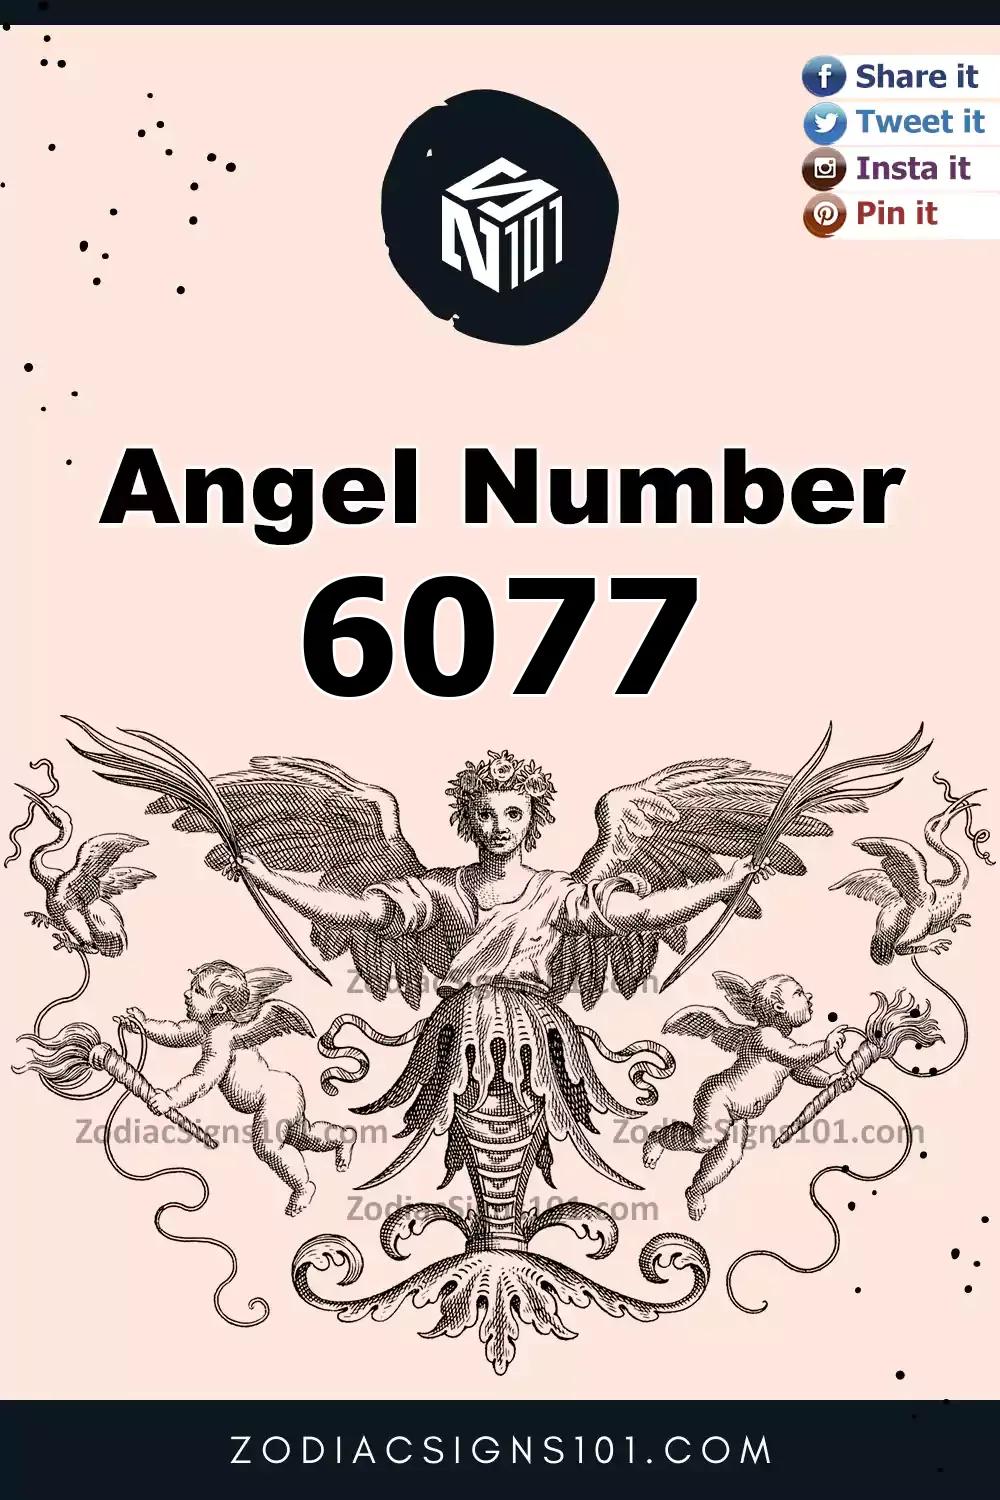 6077-Angel-Number-Meaning.jpg